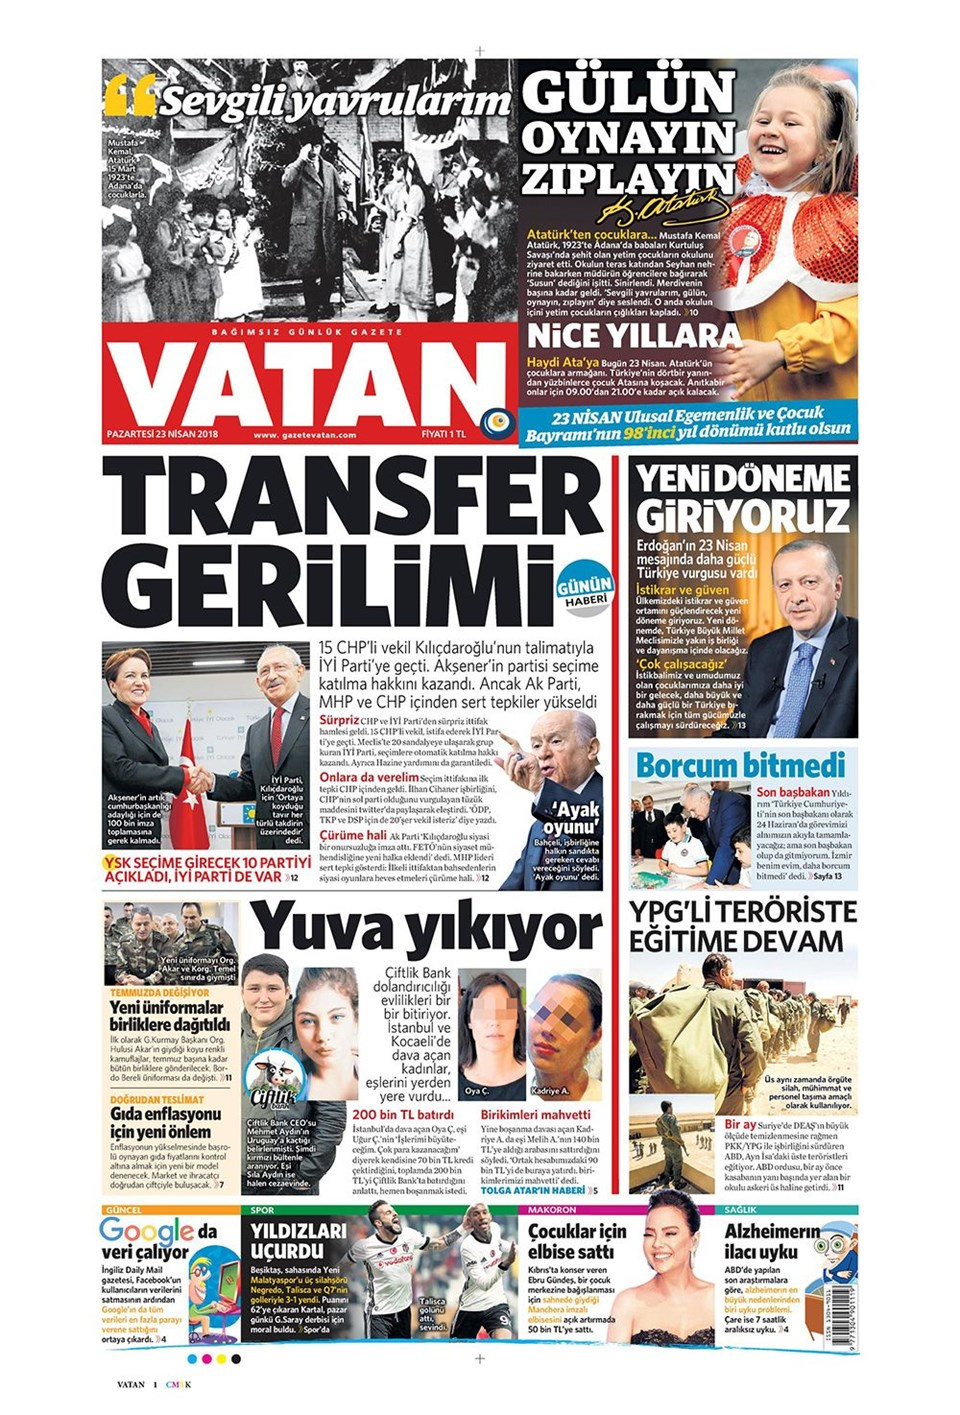 Gazete manşetleri 23 Nisan 2018 Hürriyet - Sözcü - Cumhuriyet